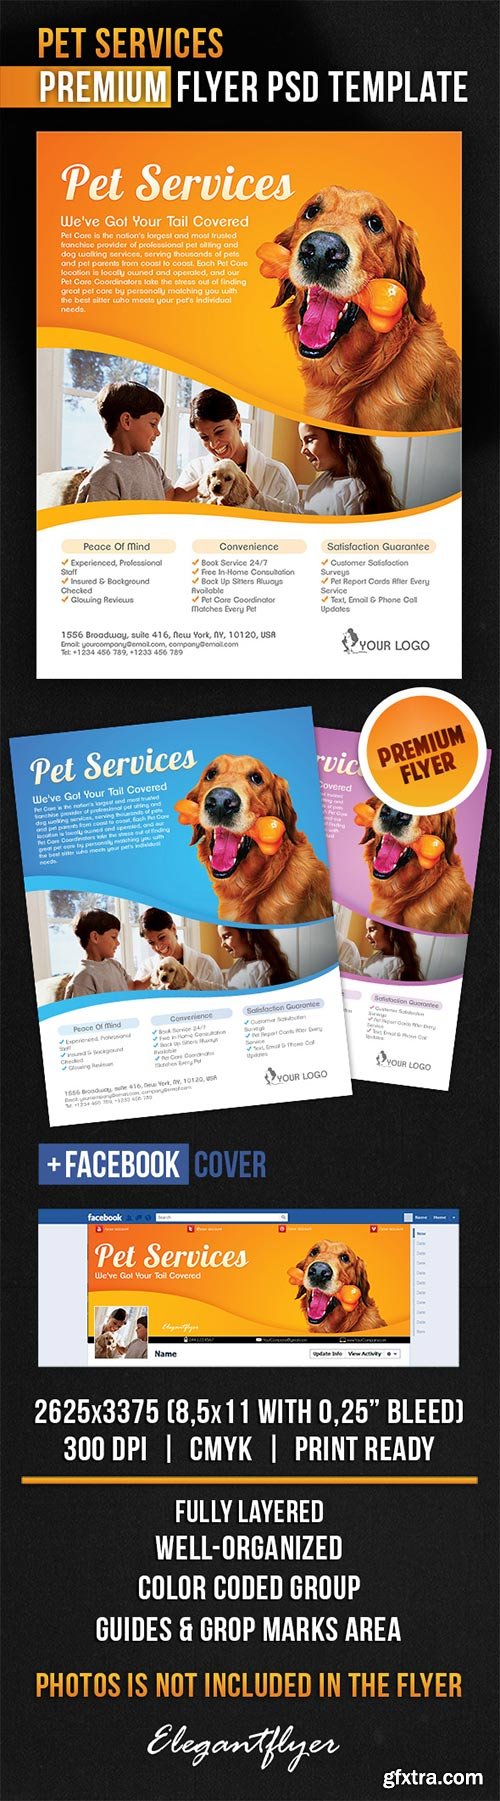 Pet Services Flyer PSD Template + Facebook Cover